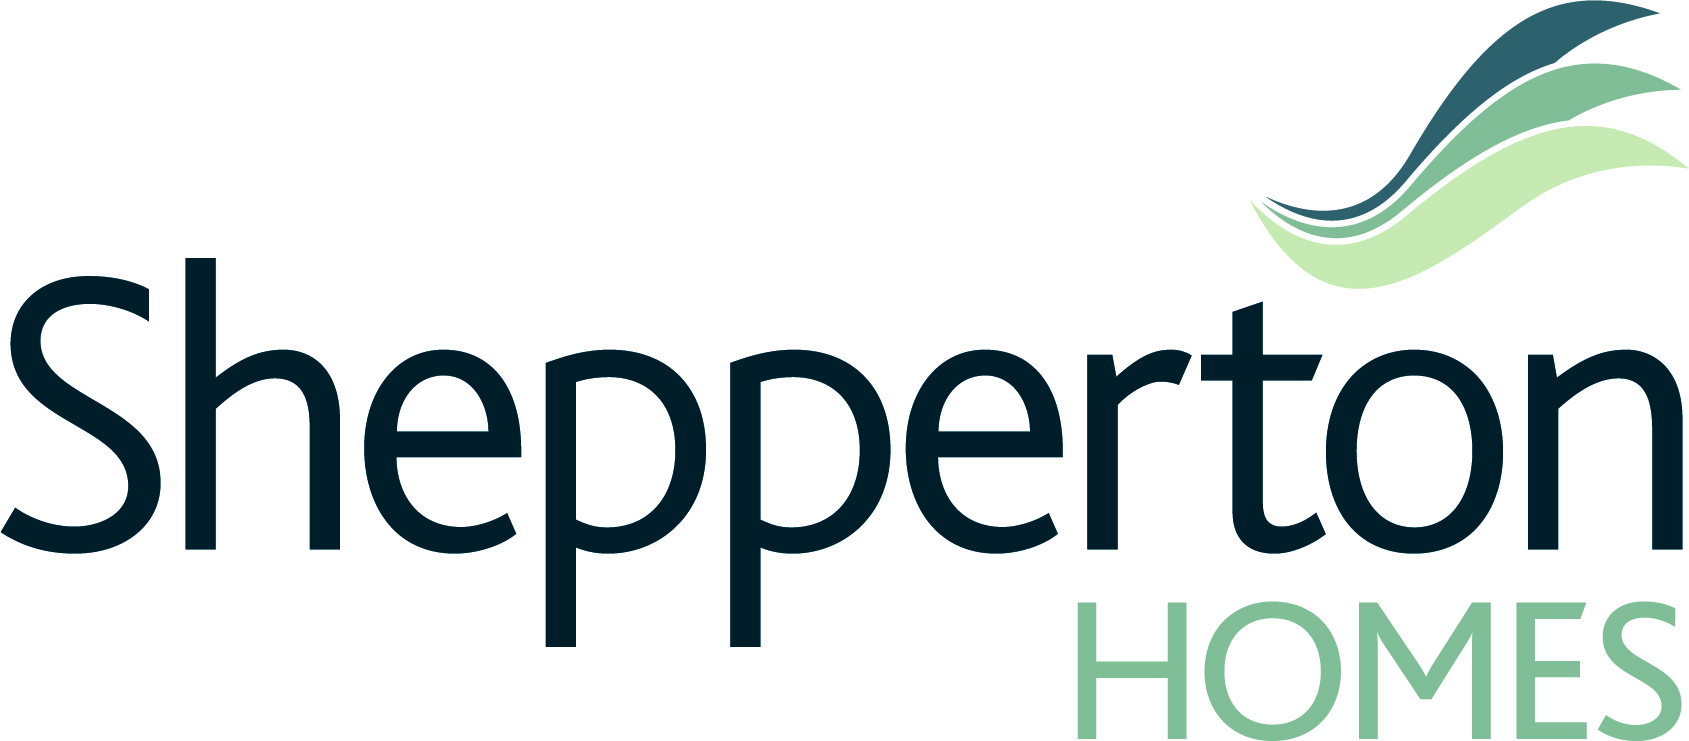 Shepperton Homes' Website